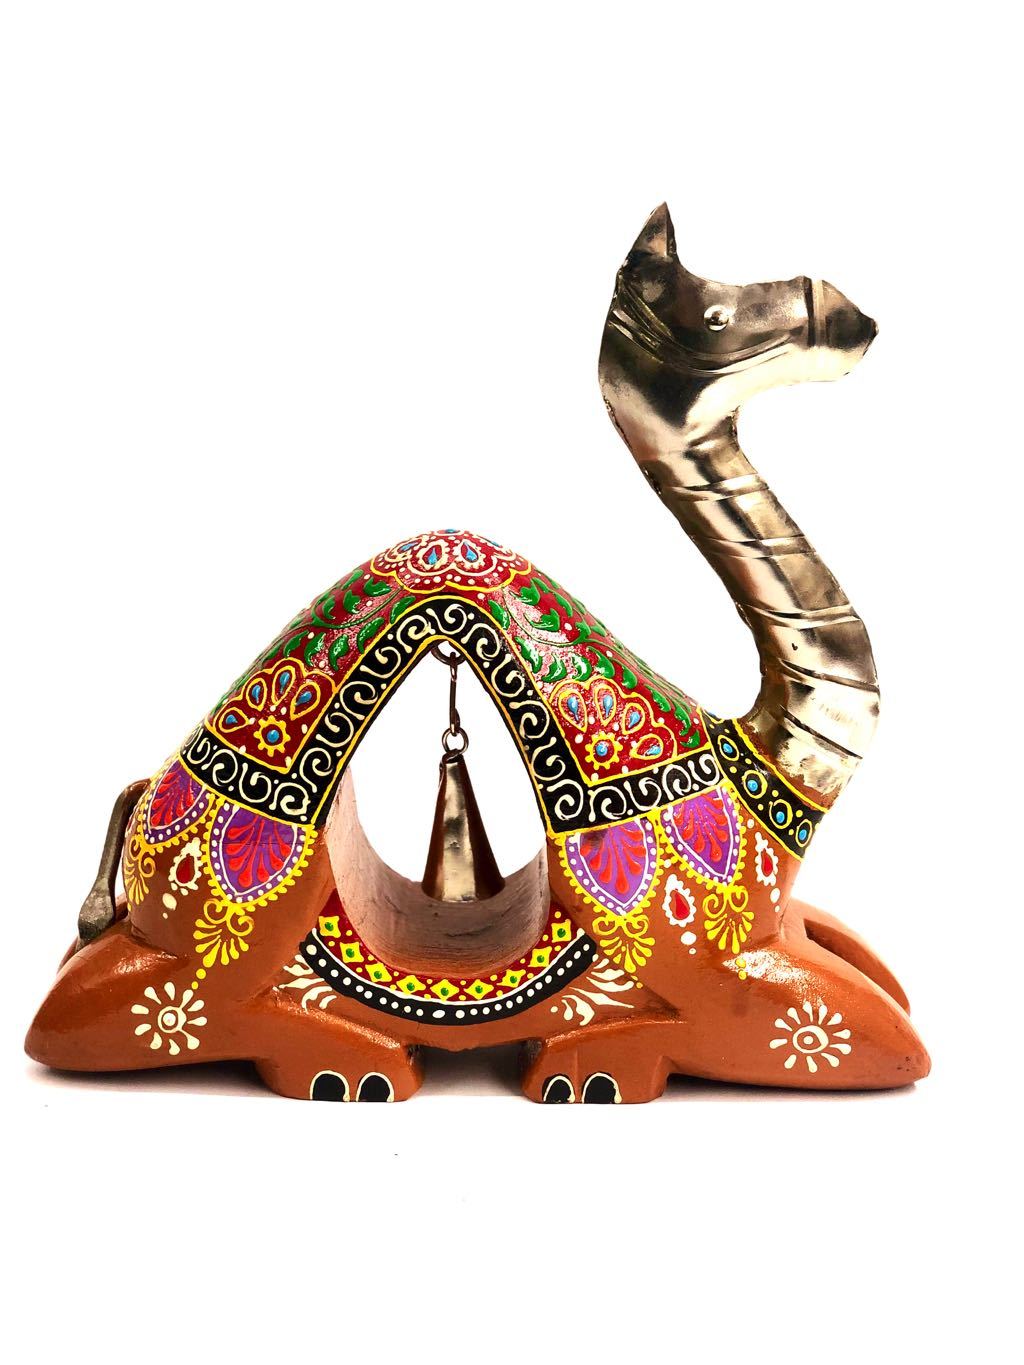 Remarkable Wooden Handmade Camel With Ringing Bell Design Tamrapatra - Tanariri Hastakala